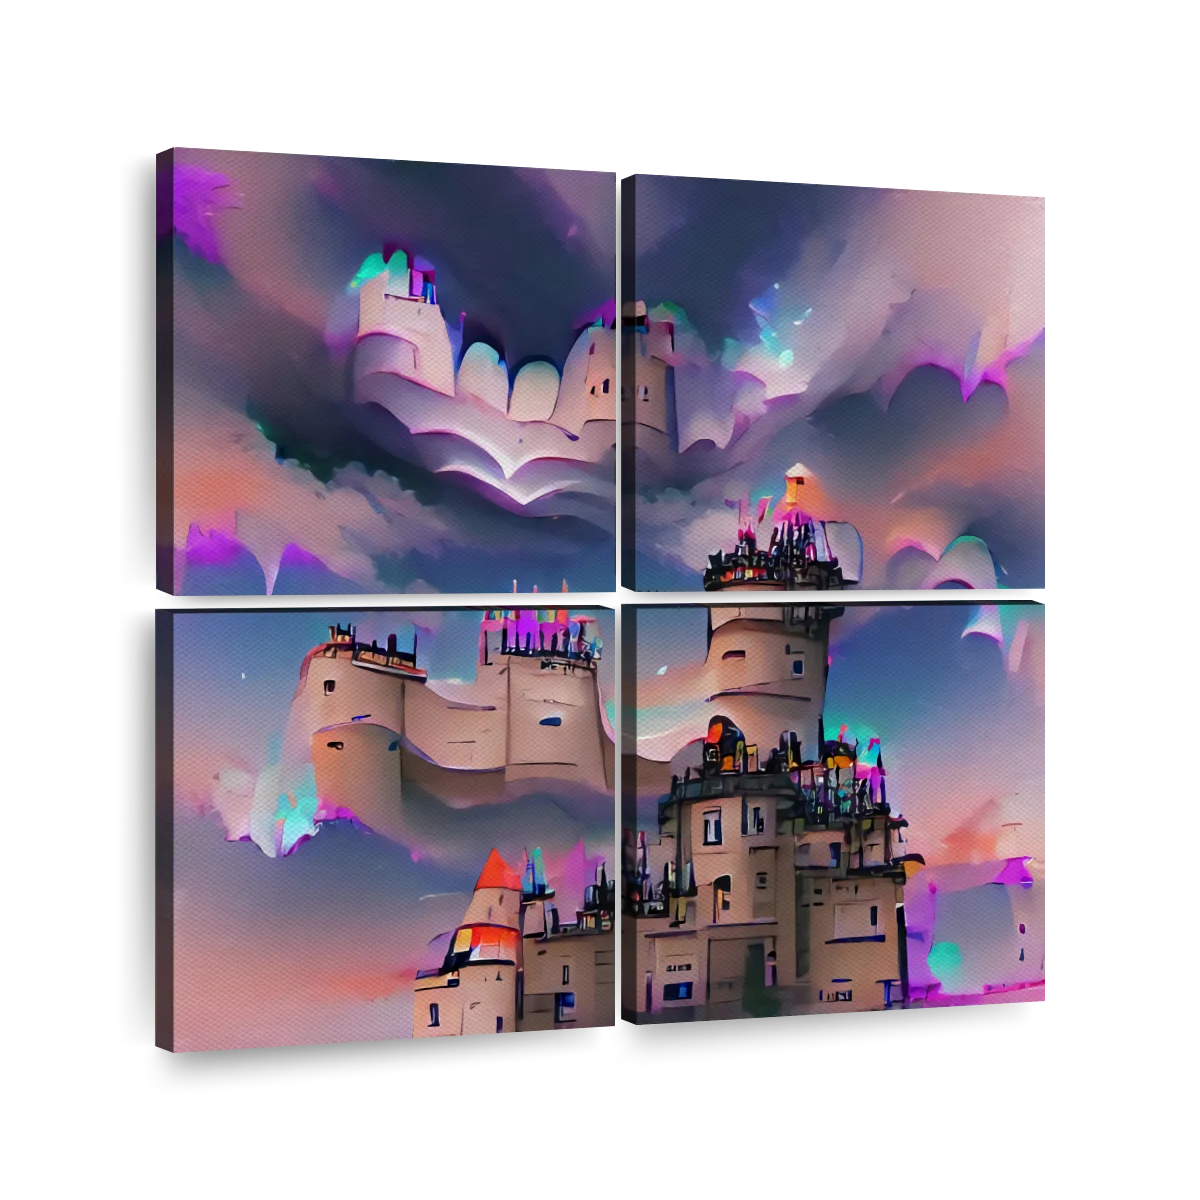 The Fantasy Castle Art Print